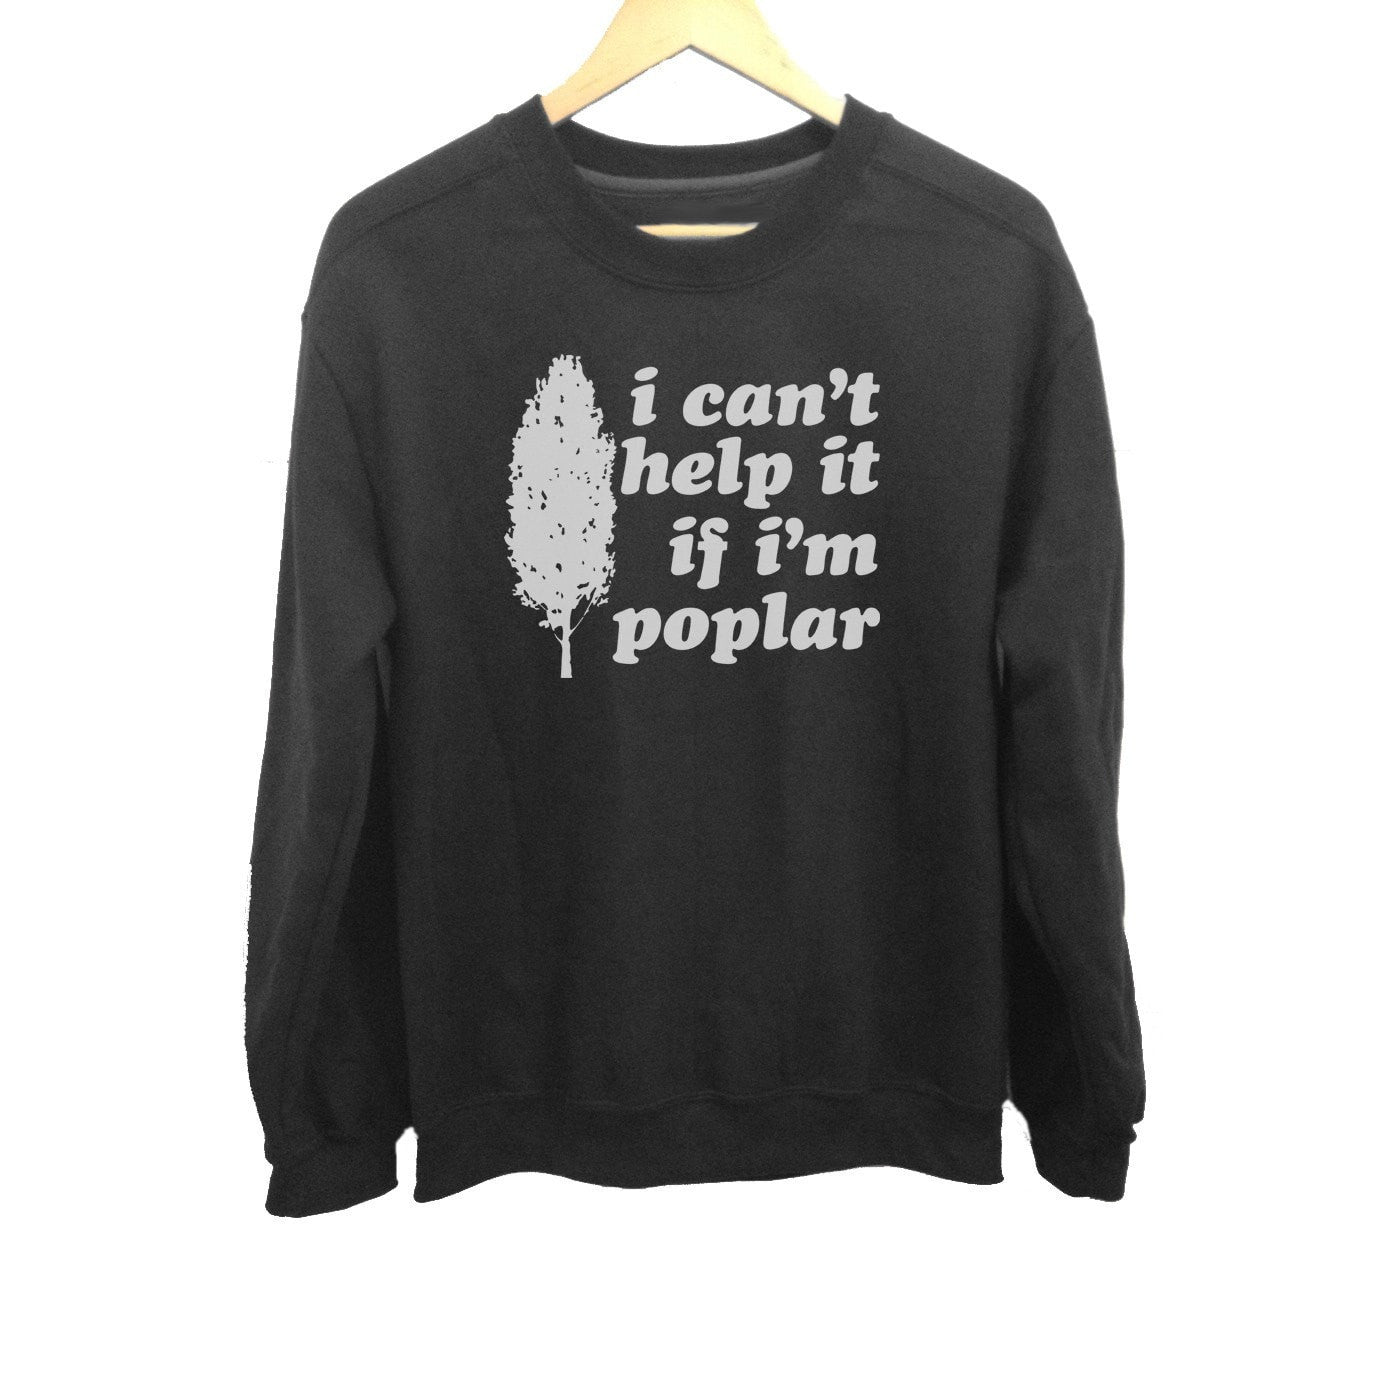 Unisex I Can't Help It If I'm Poplar Sweatshirt - Funny Tree Pun Shirt